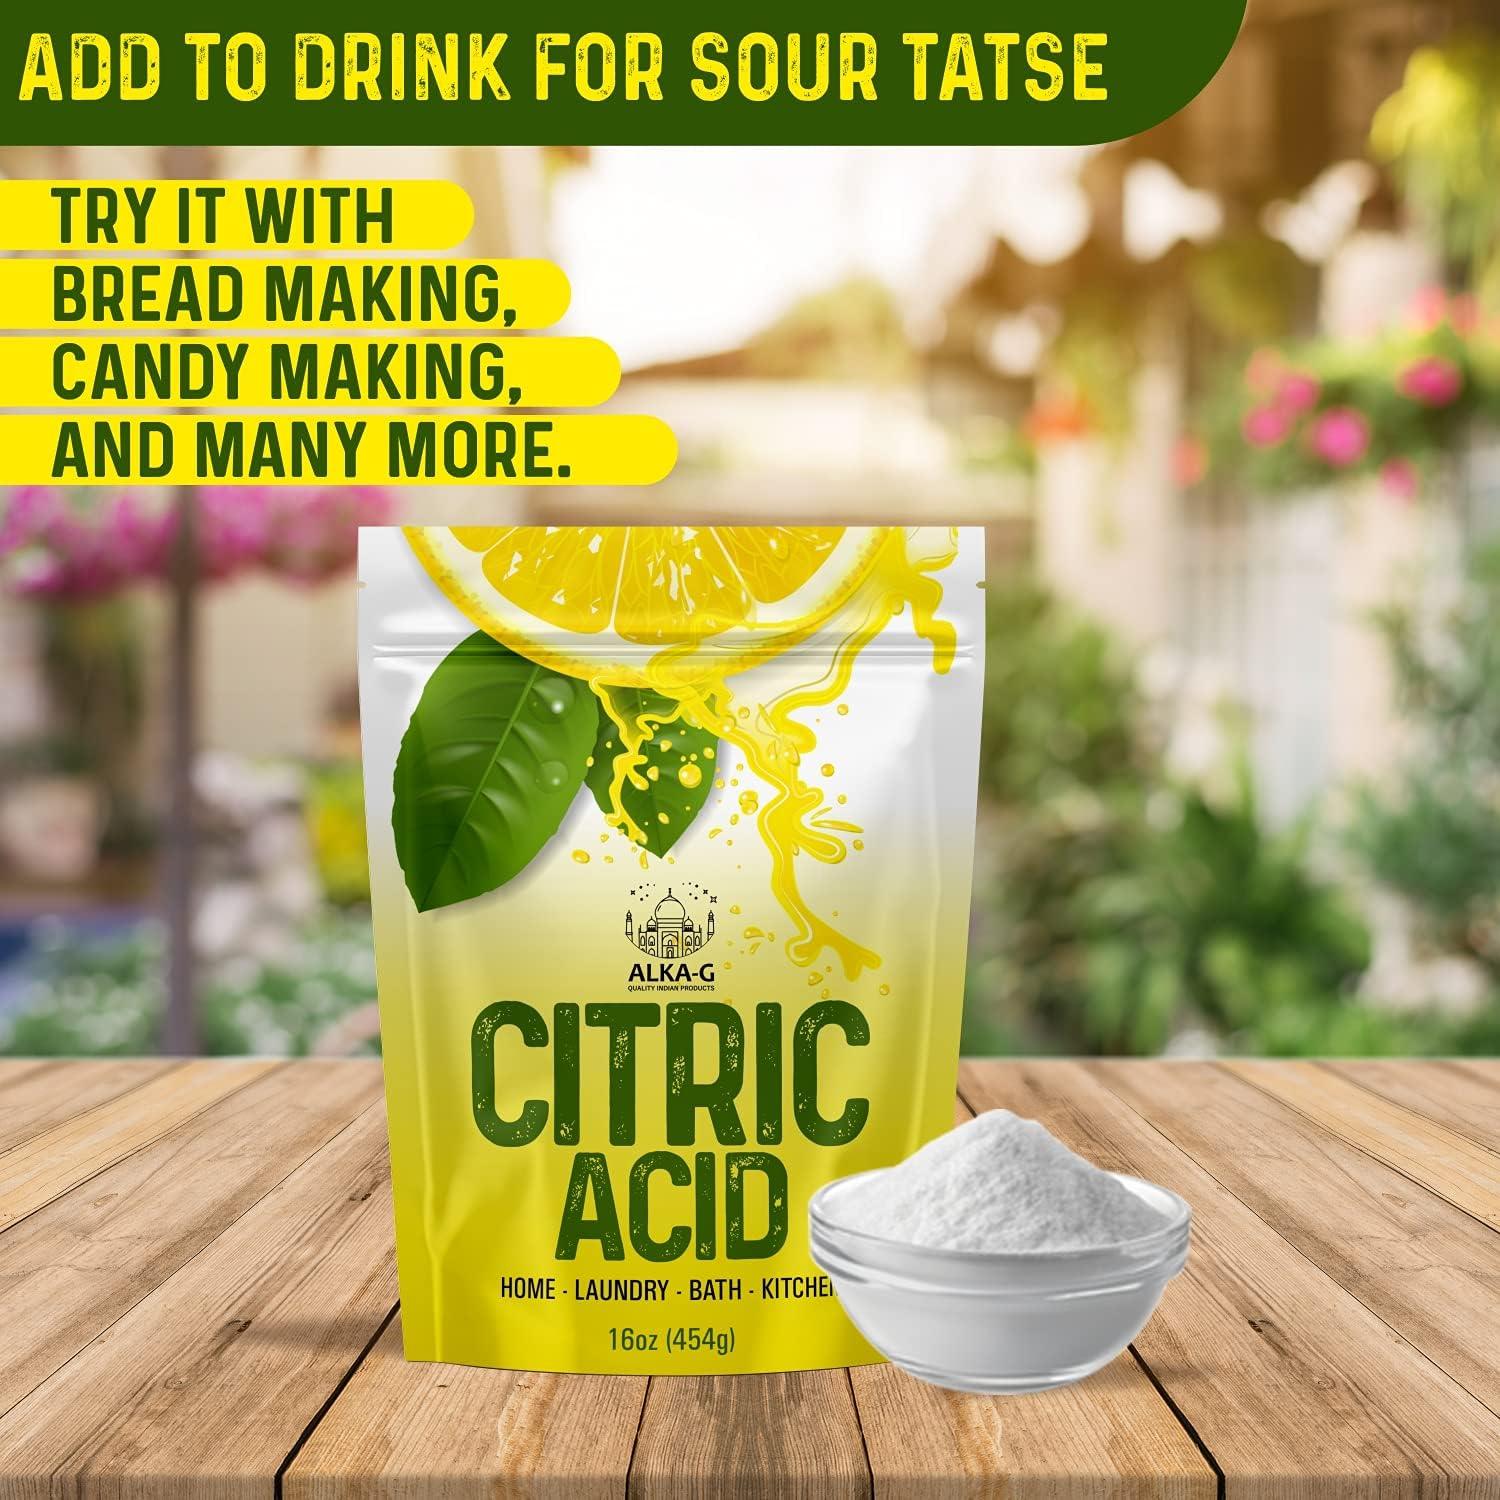 Citric Acid - 6lb Pure for Bath Bombs